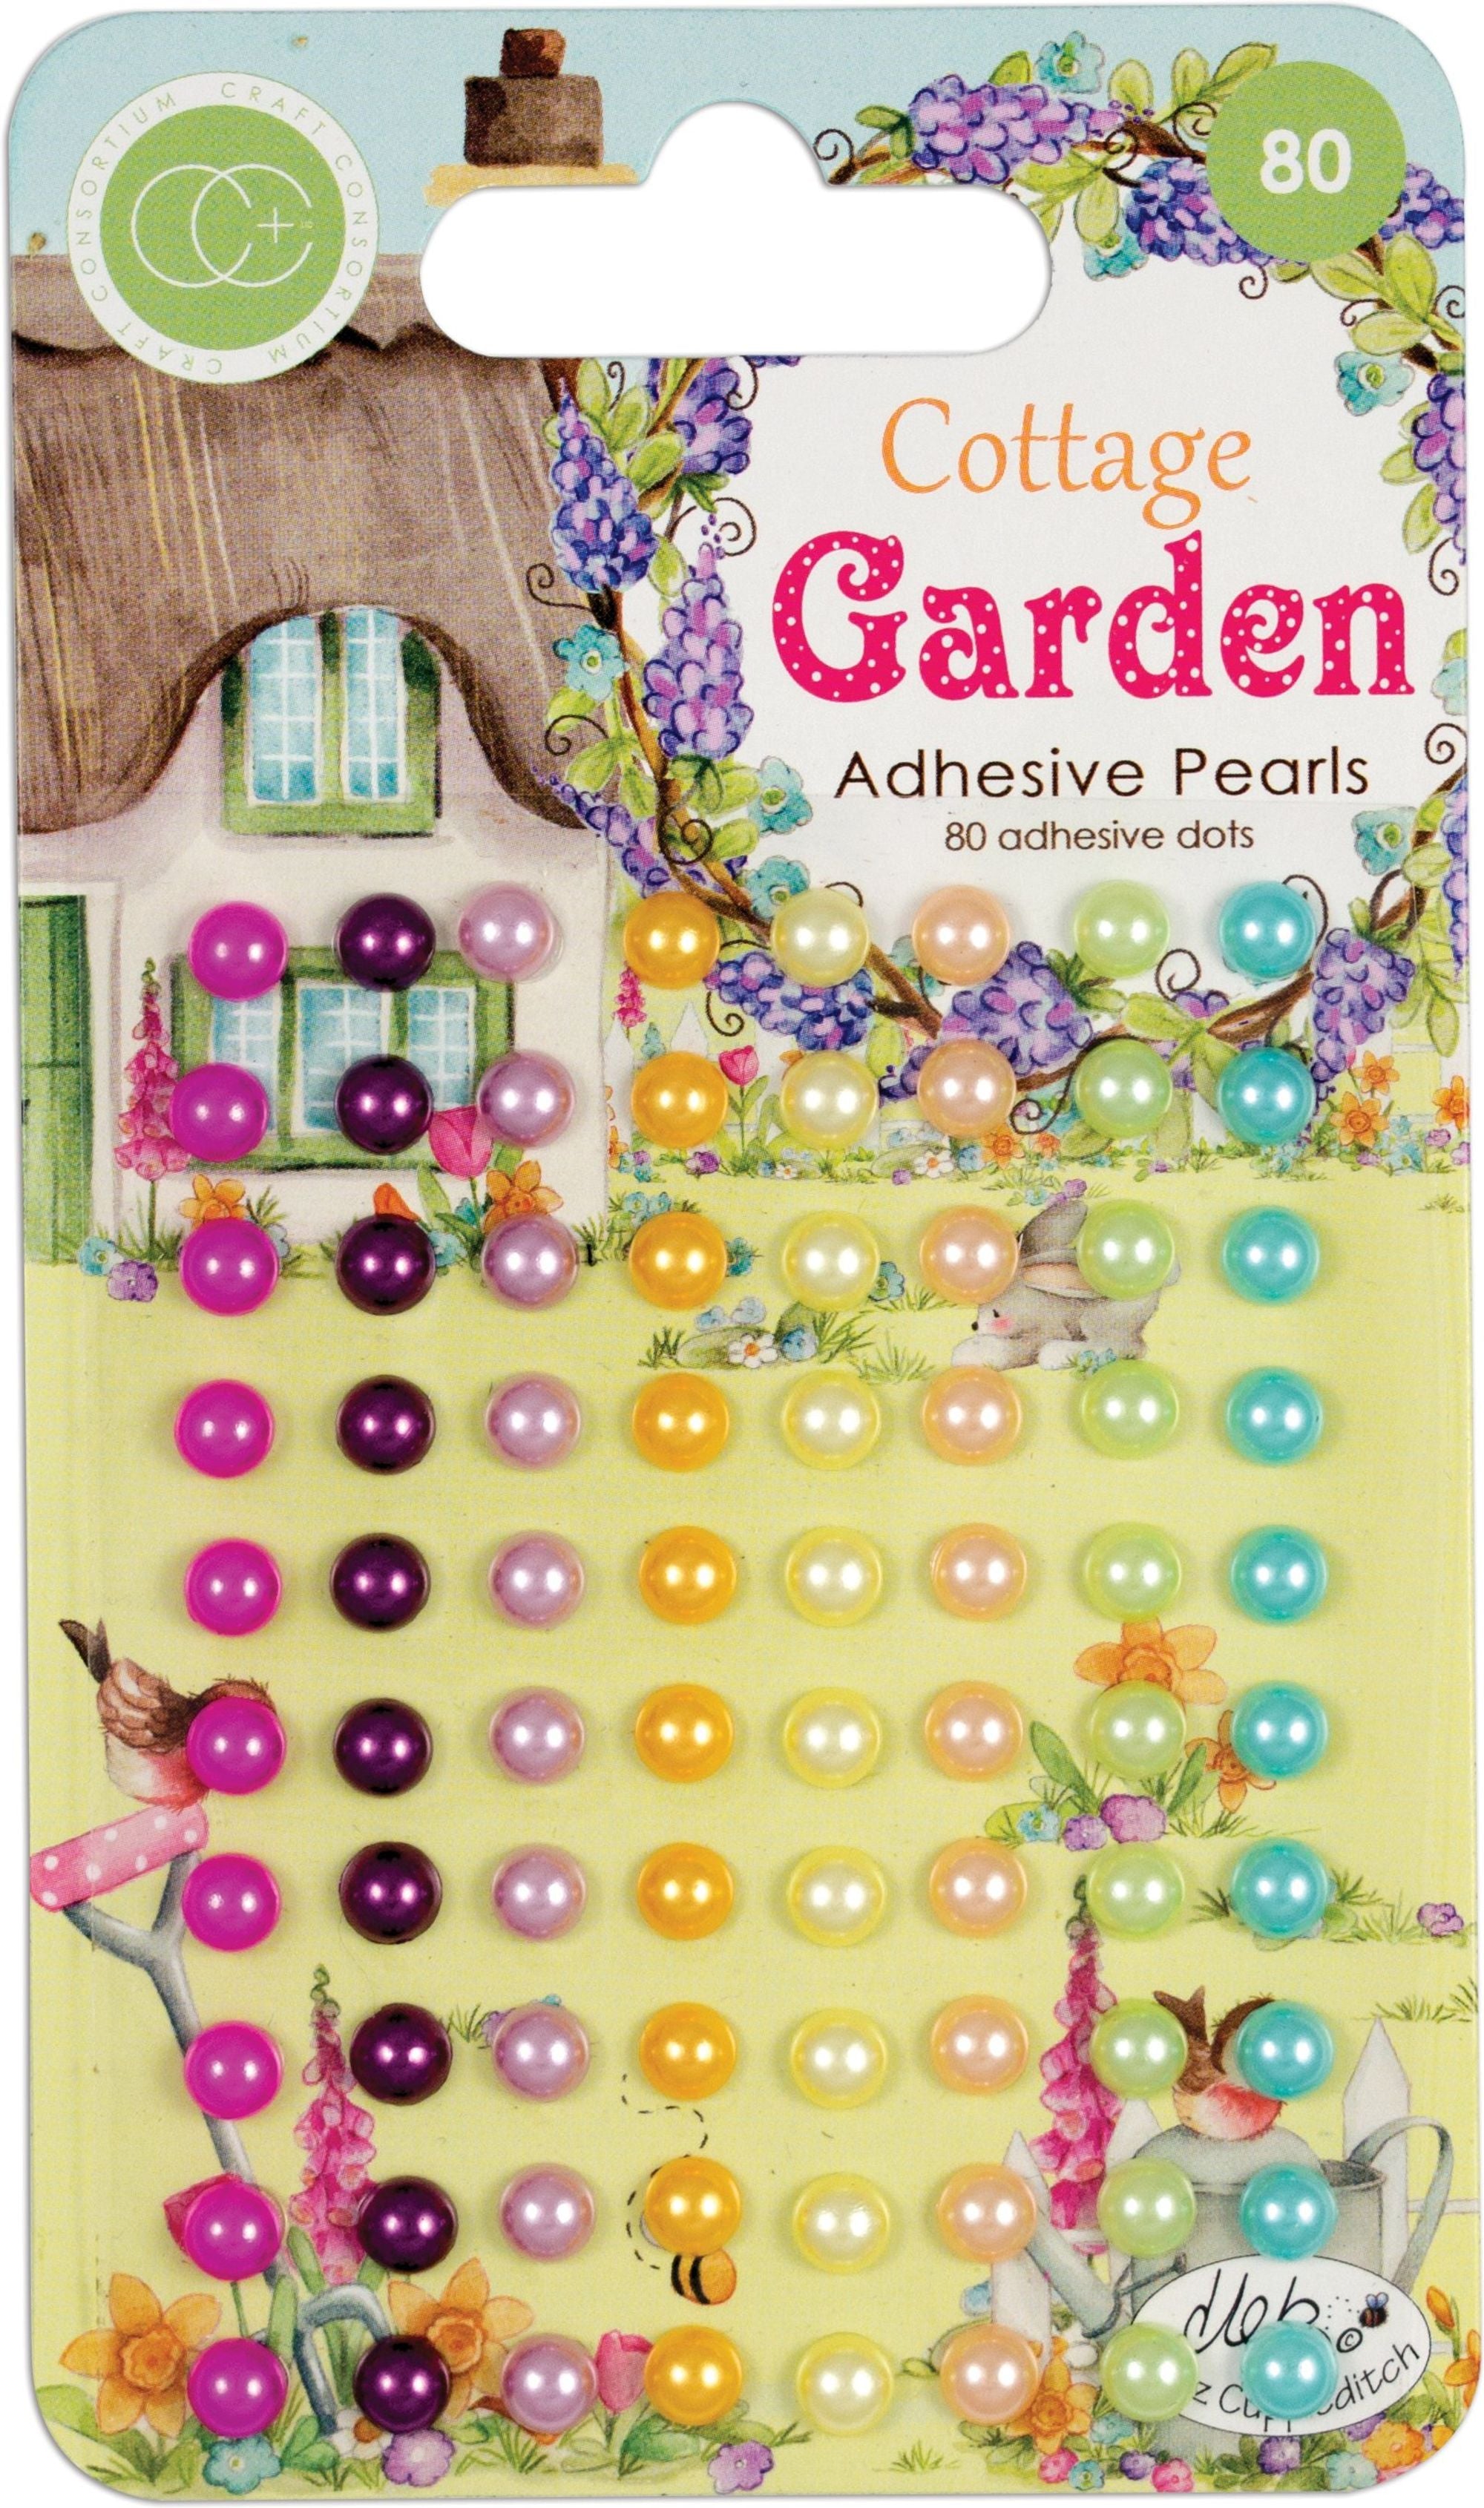 Cottage Garden - Adhesive Pearls